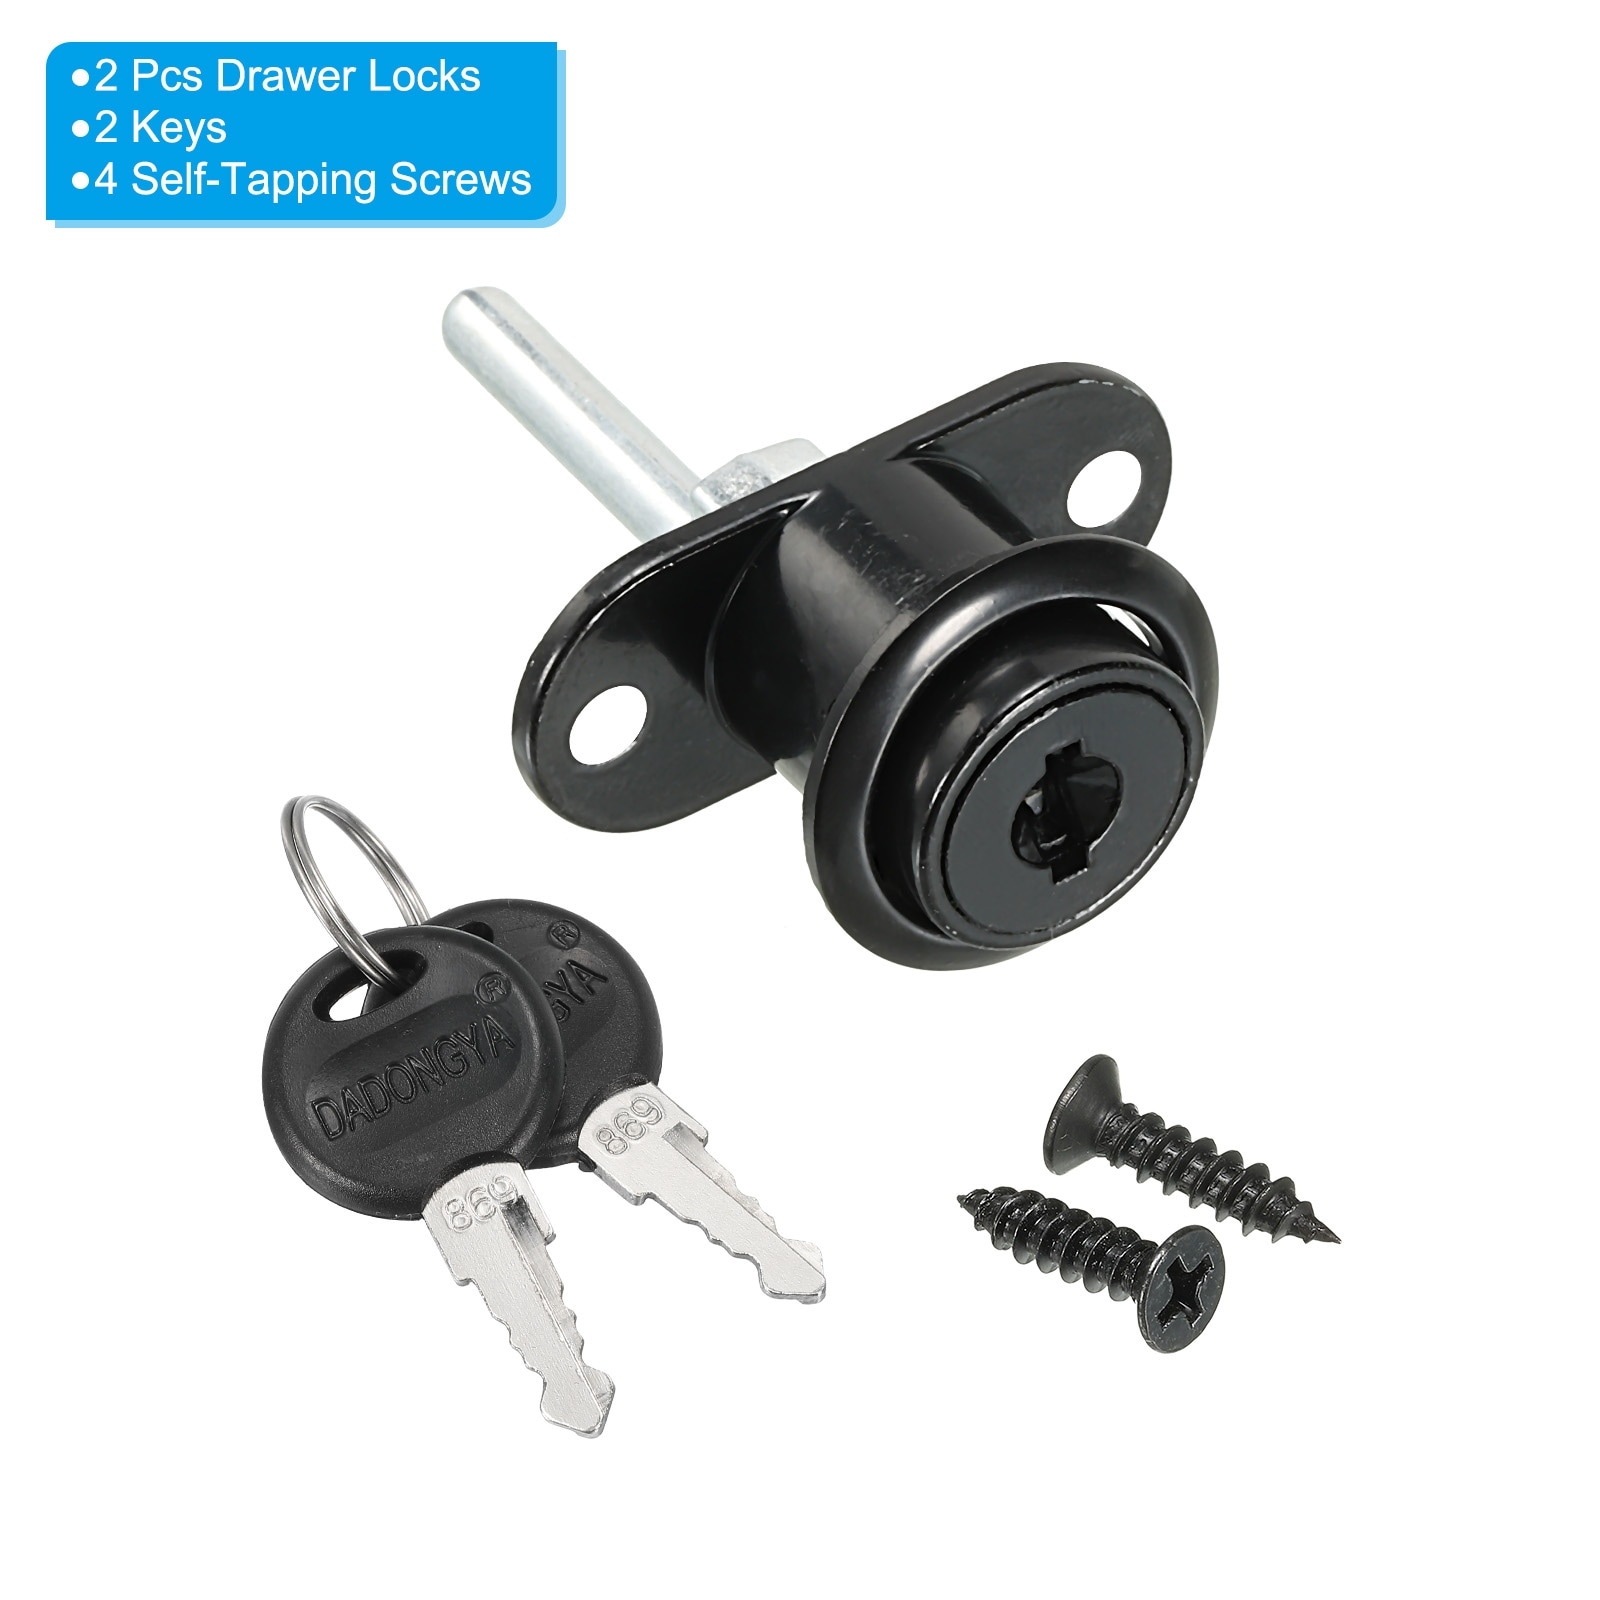 19mm Drawer Locks with Keys, 2 Pack Zinc Alloy Office Drawer Lock